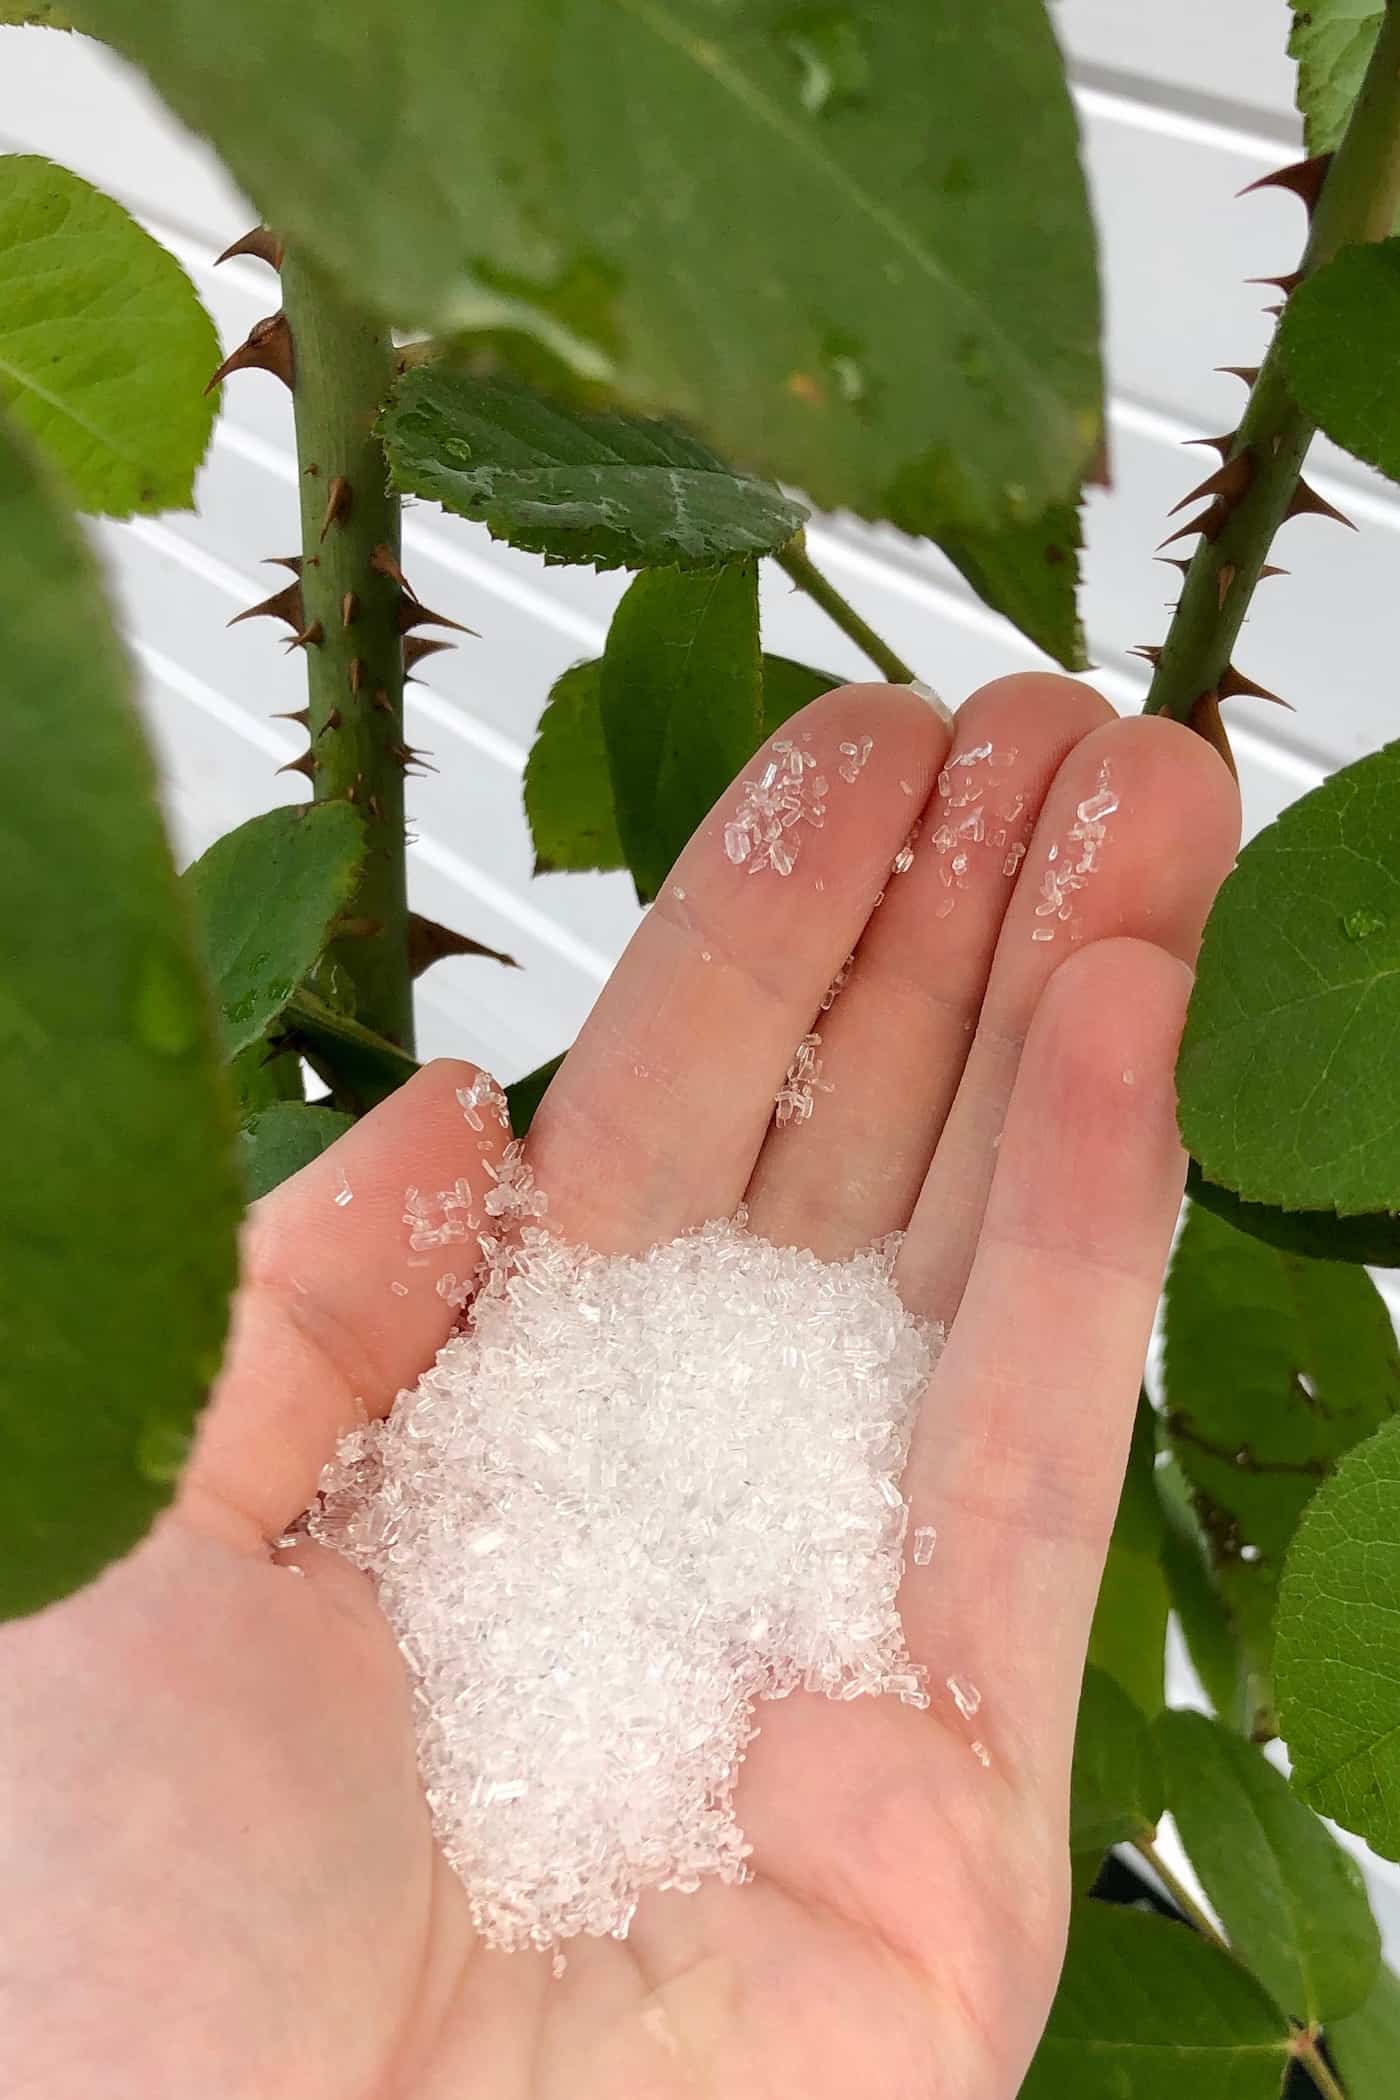 Using epsom salt as an organic plant fertilizer